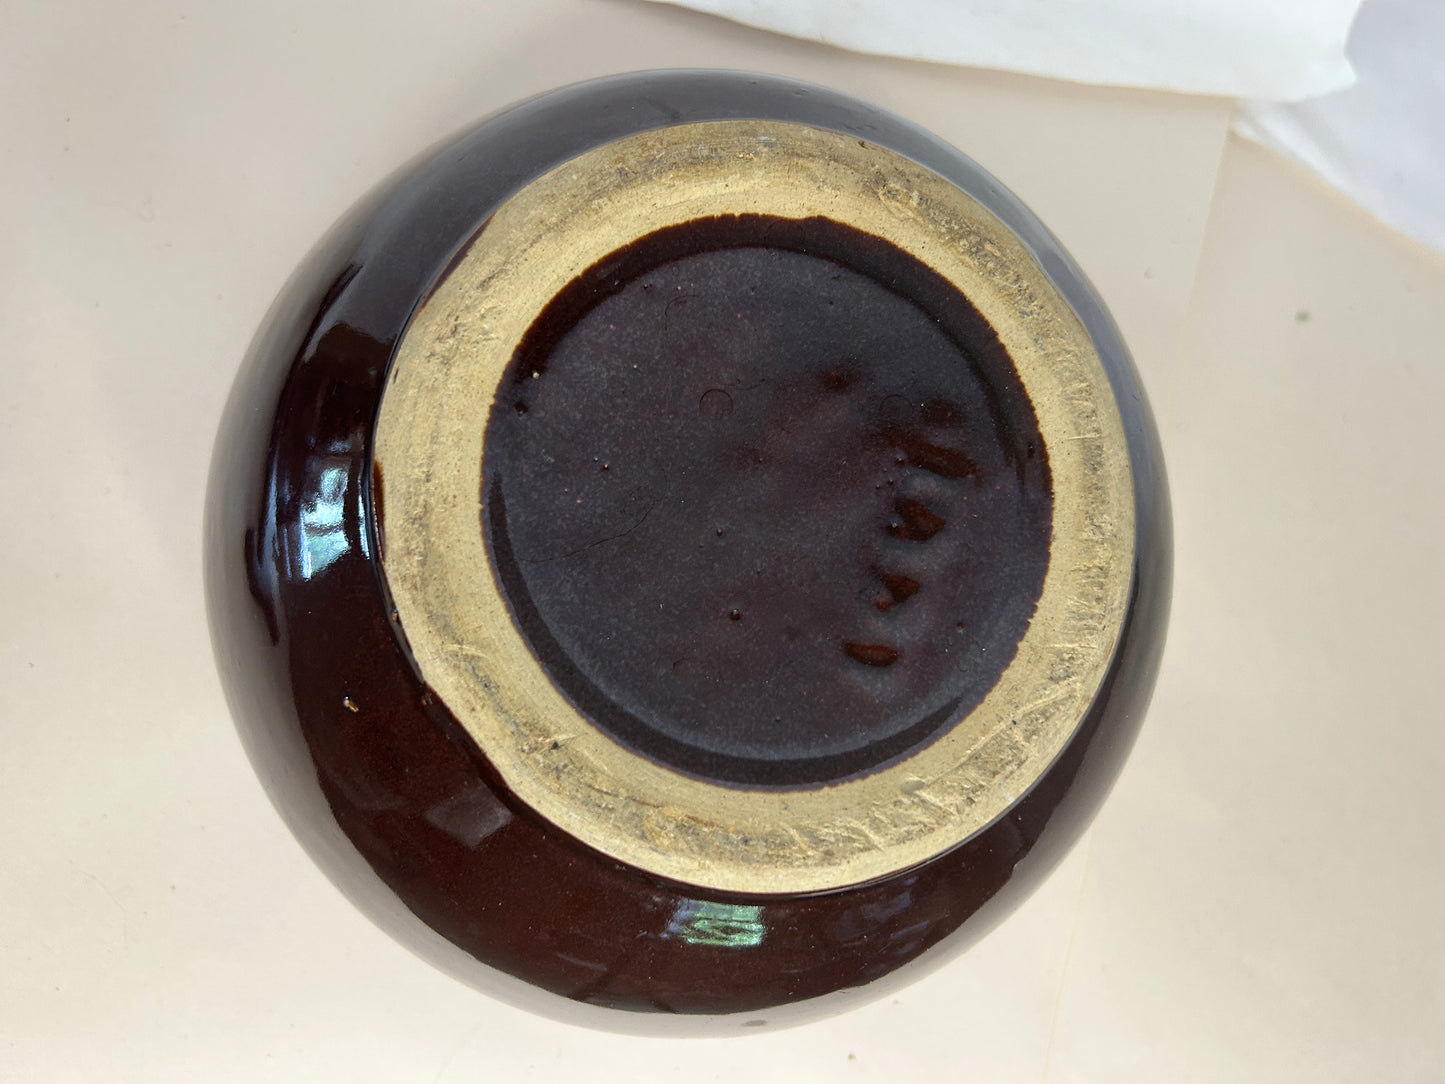 Antique c. 1920s Deep Brown Stoneware Glazed Artisan Beanpot